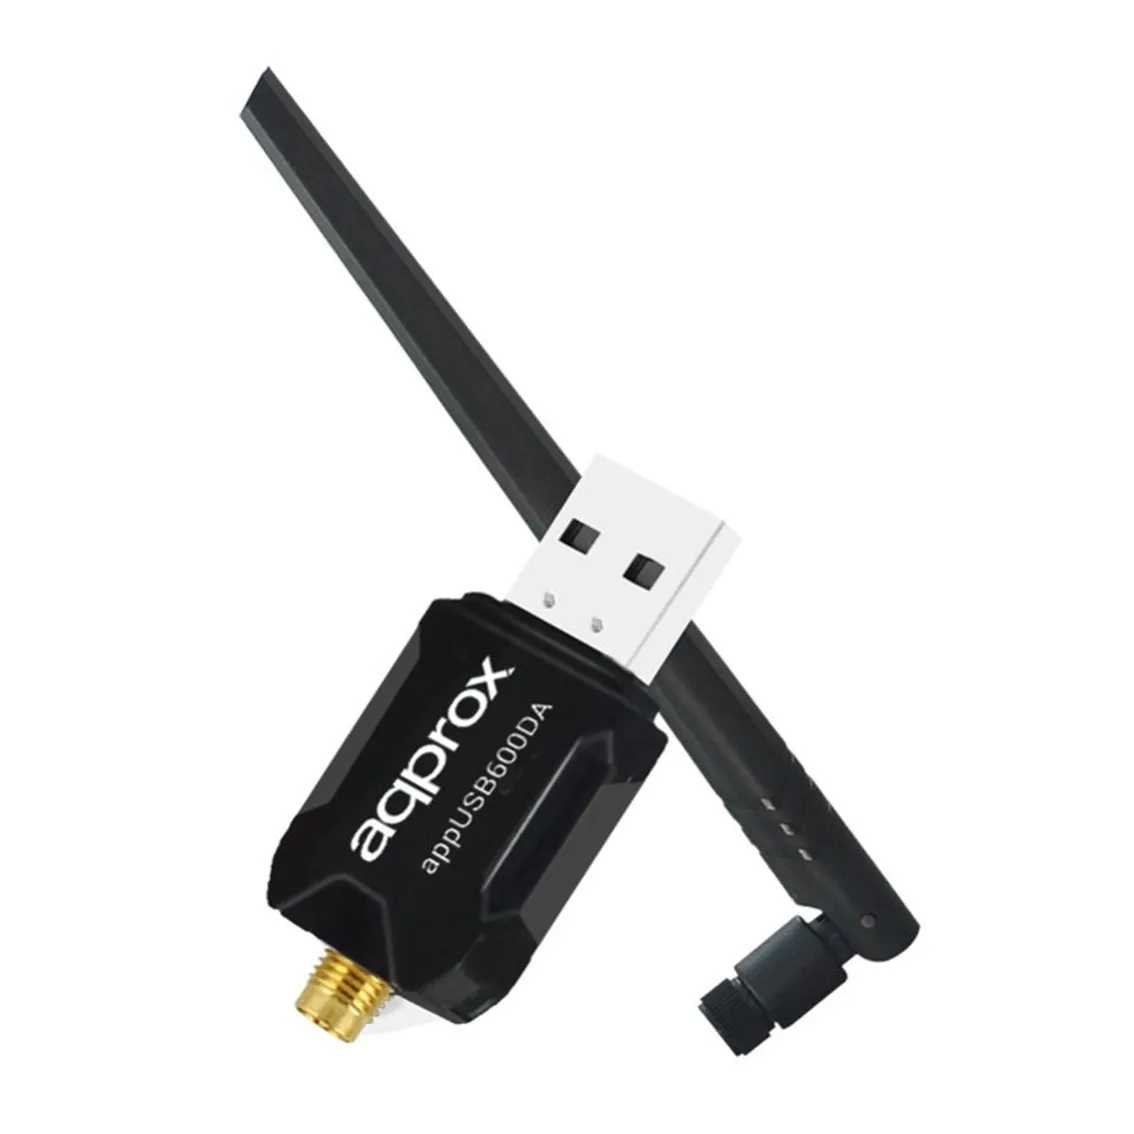 USB WIRELESS 600 Mbps. NANO + ANTENA EXTRAIBLE APPROX